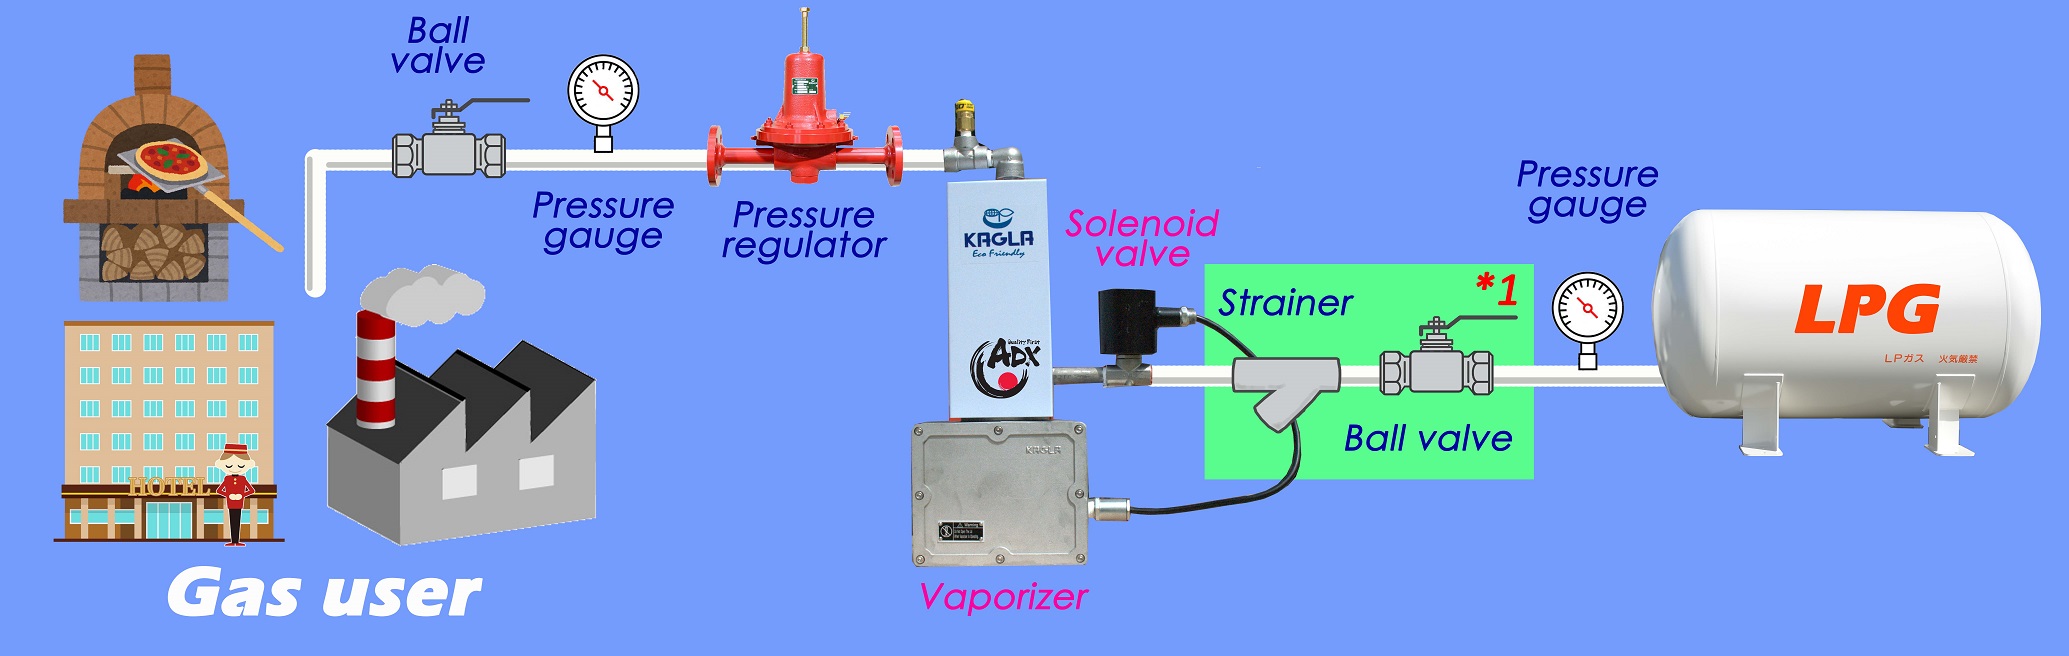 Installation image of ADX vaporizer